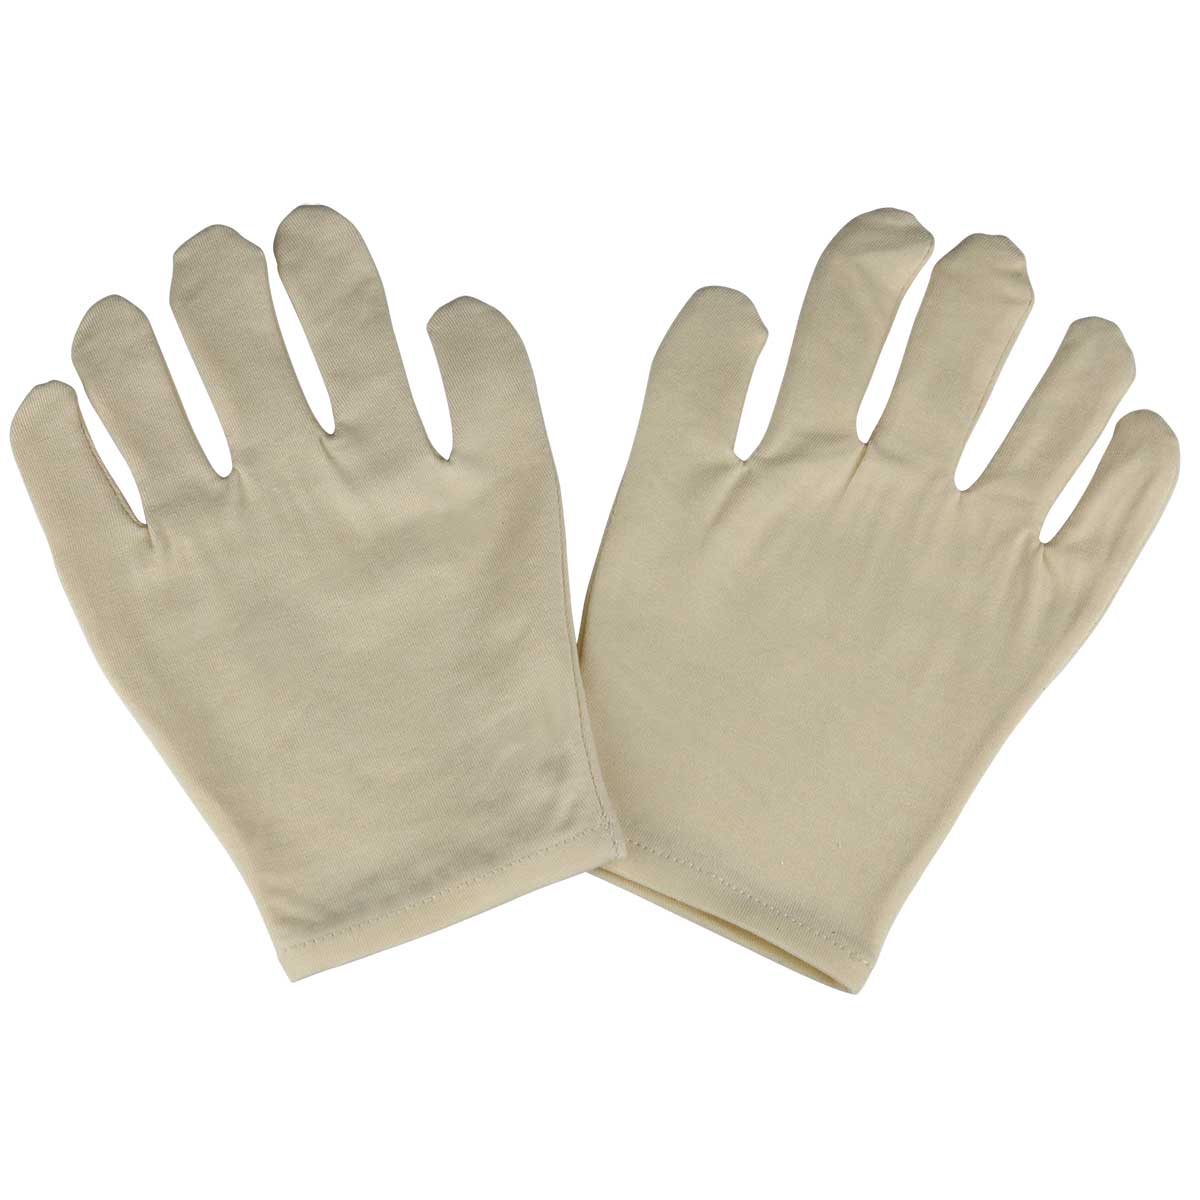 Wholesale Natural Unbleached Moisturizing Gloves